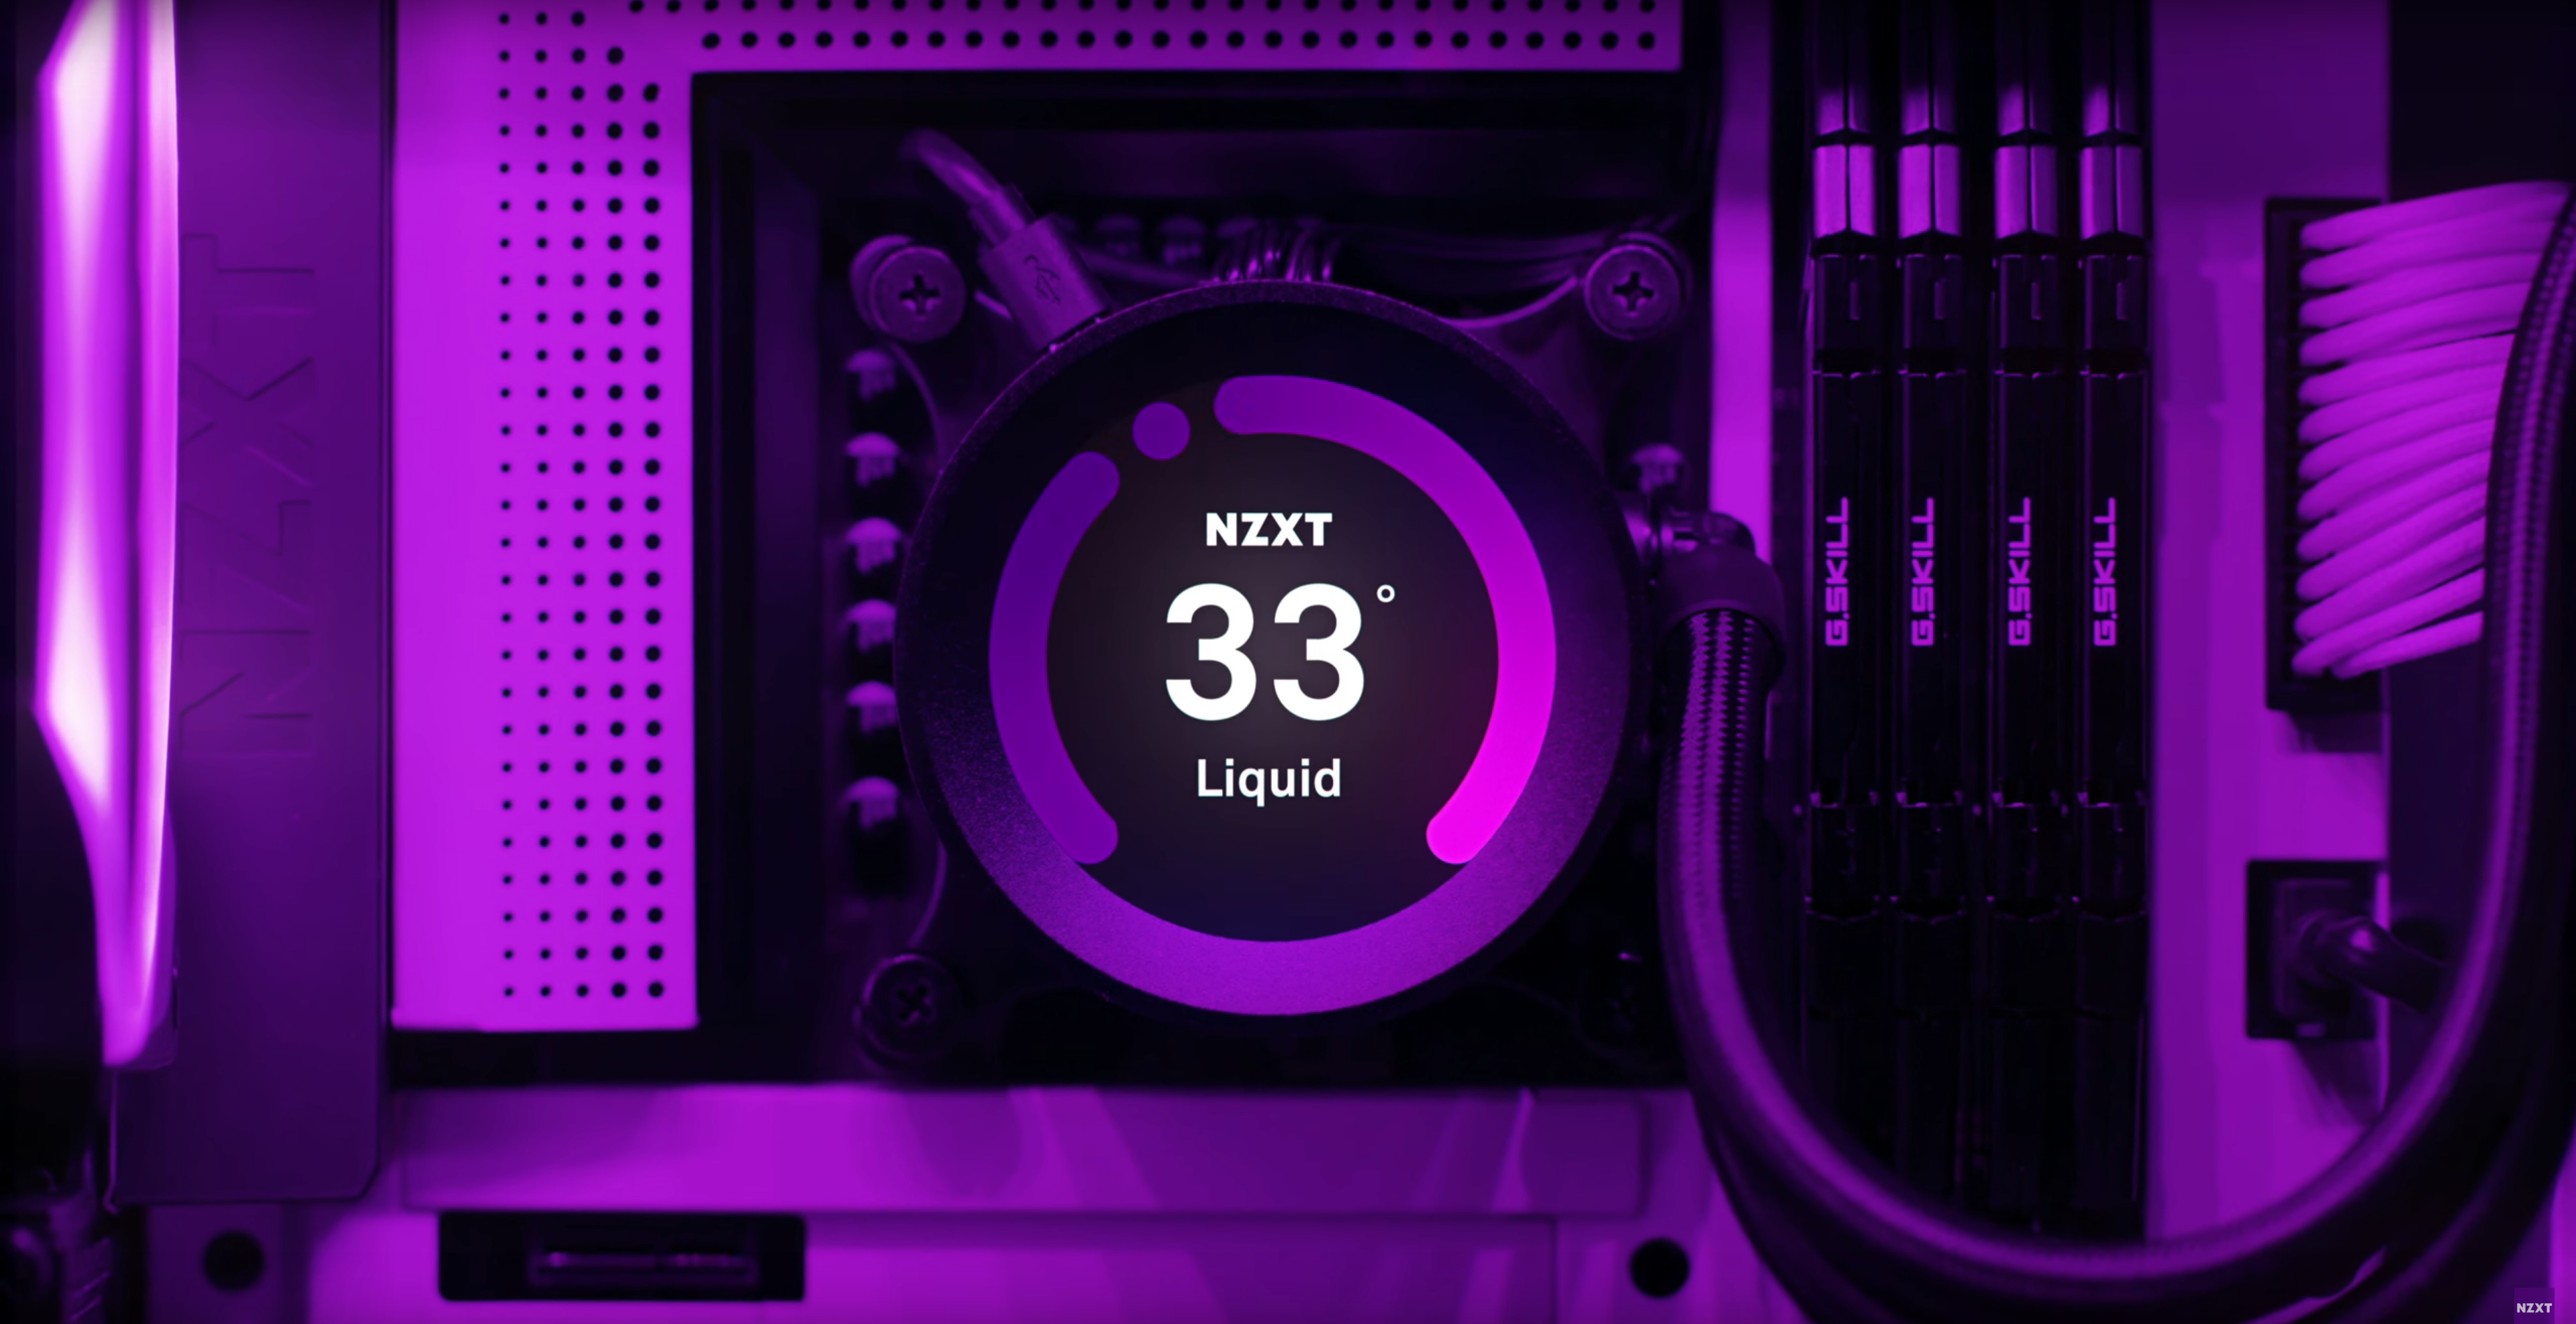 Cool liquid cooler from NXZT